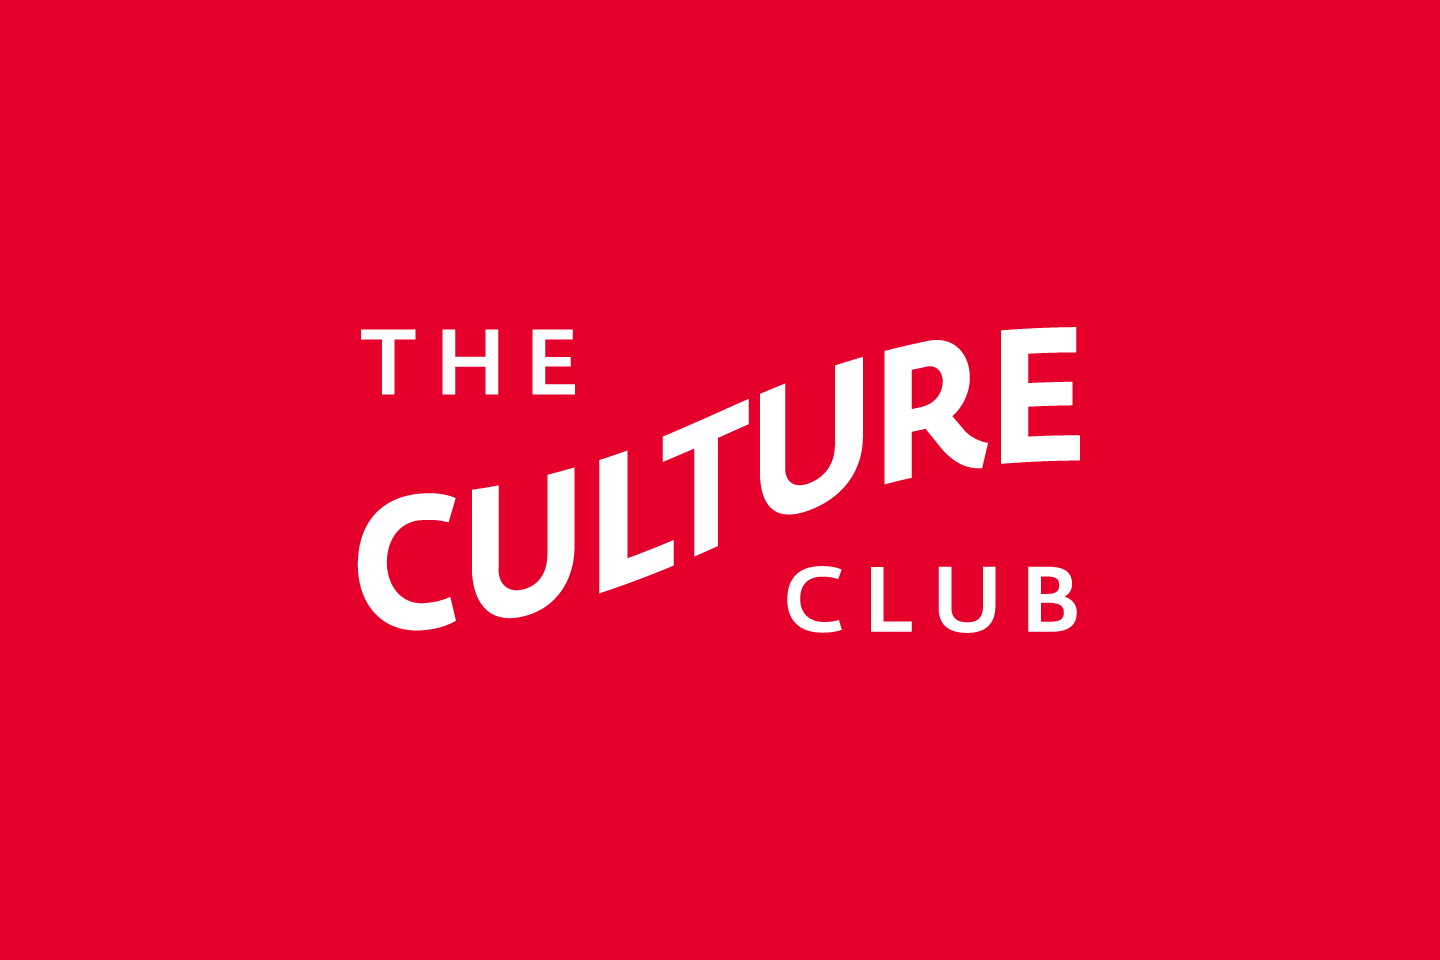 The Culture Club logo